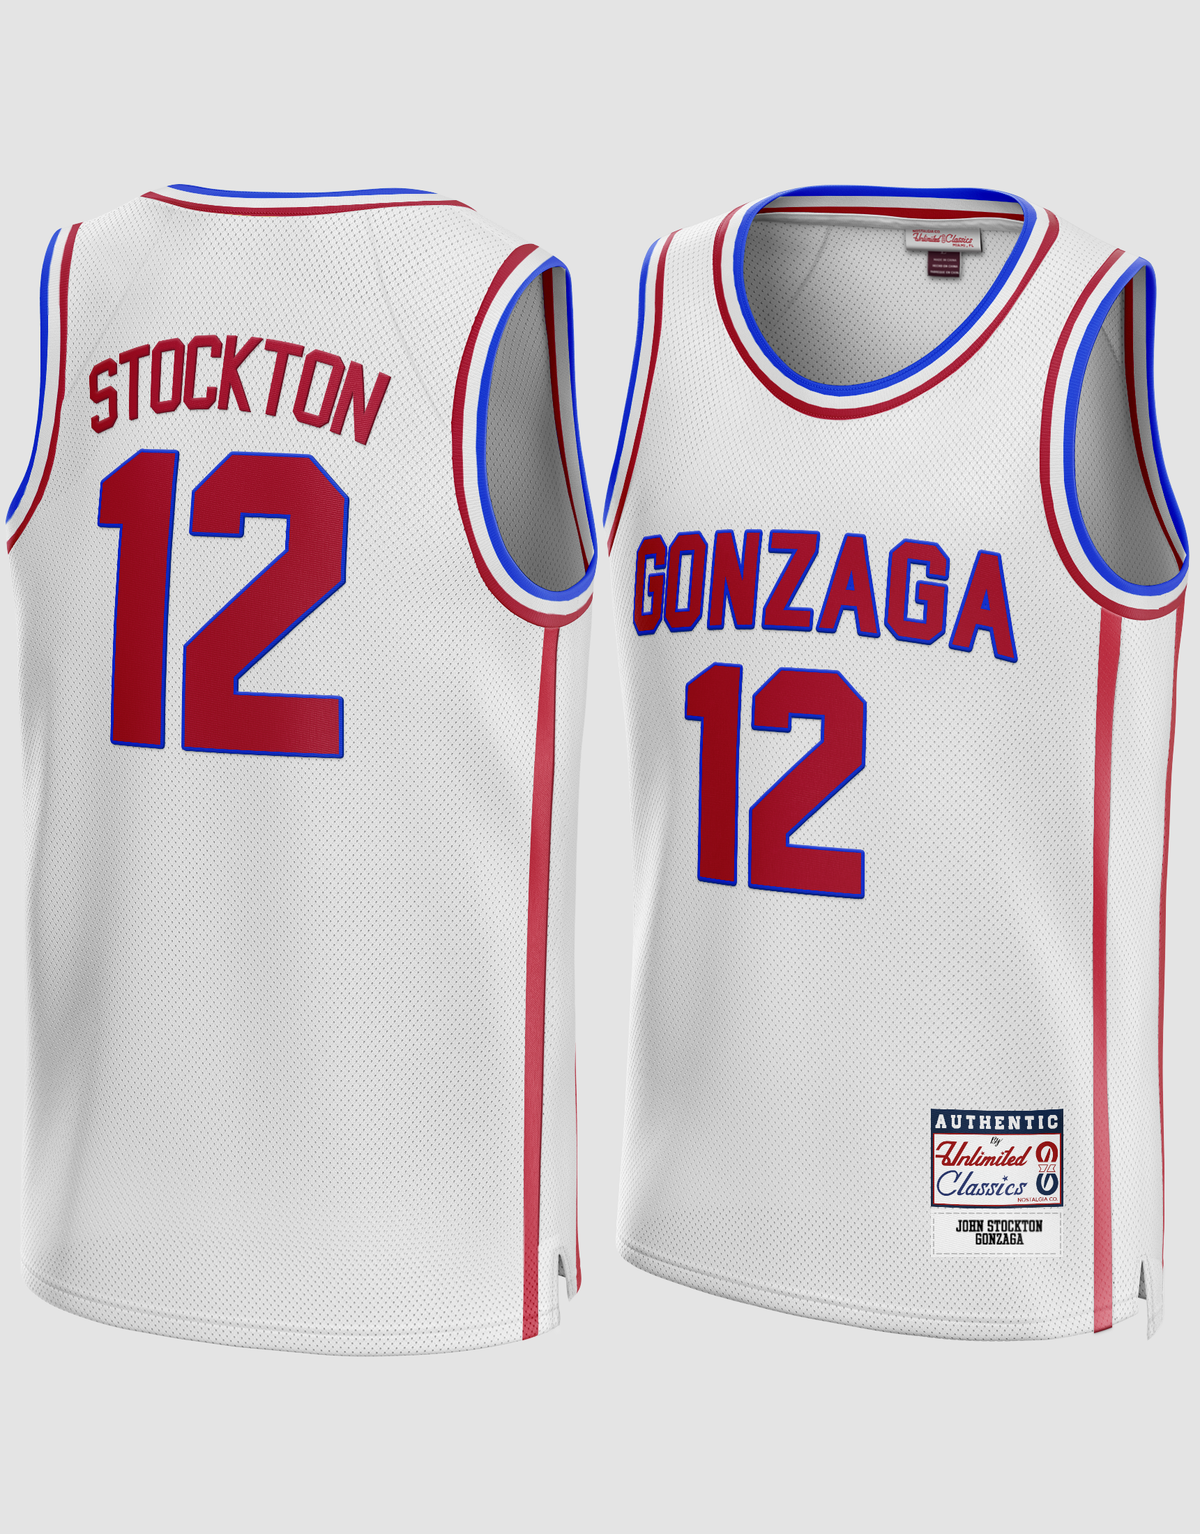 John Stockton #12 Gonzaga Basketball Jersey